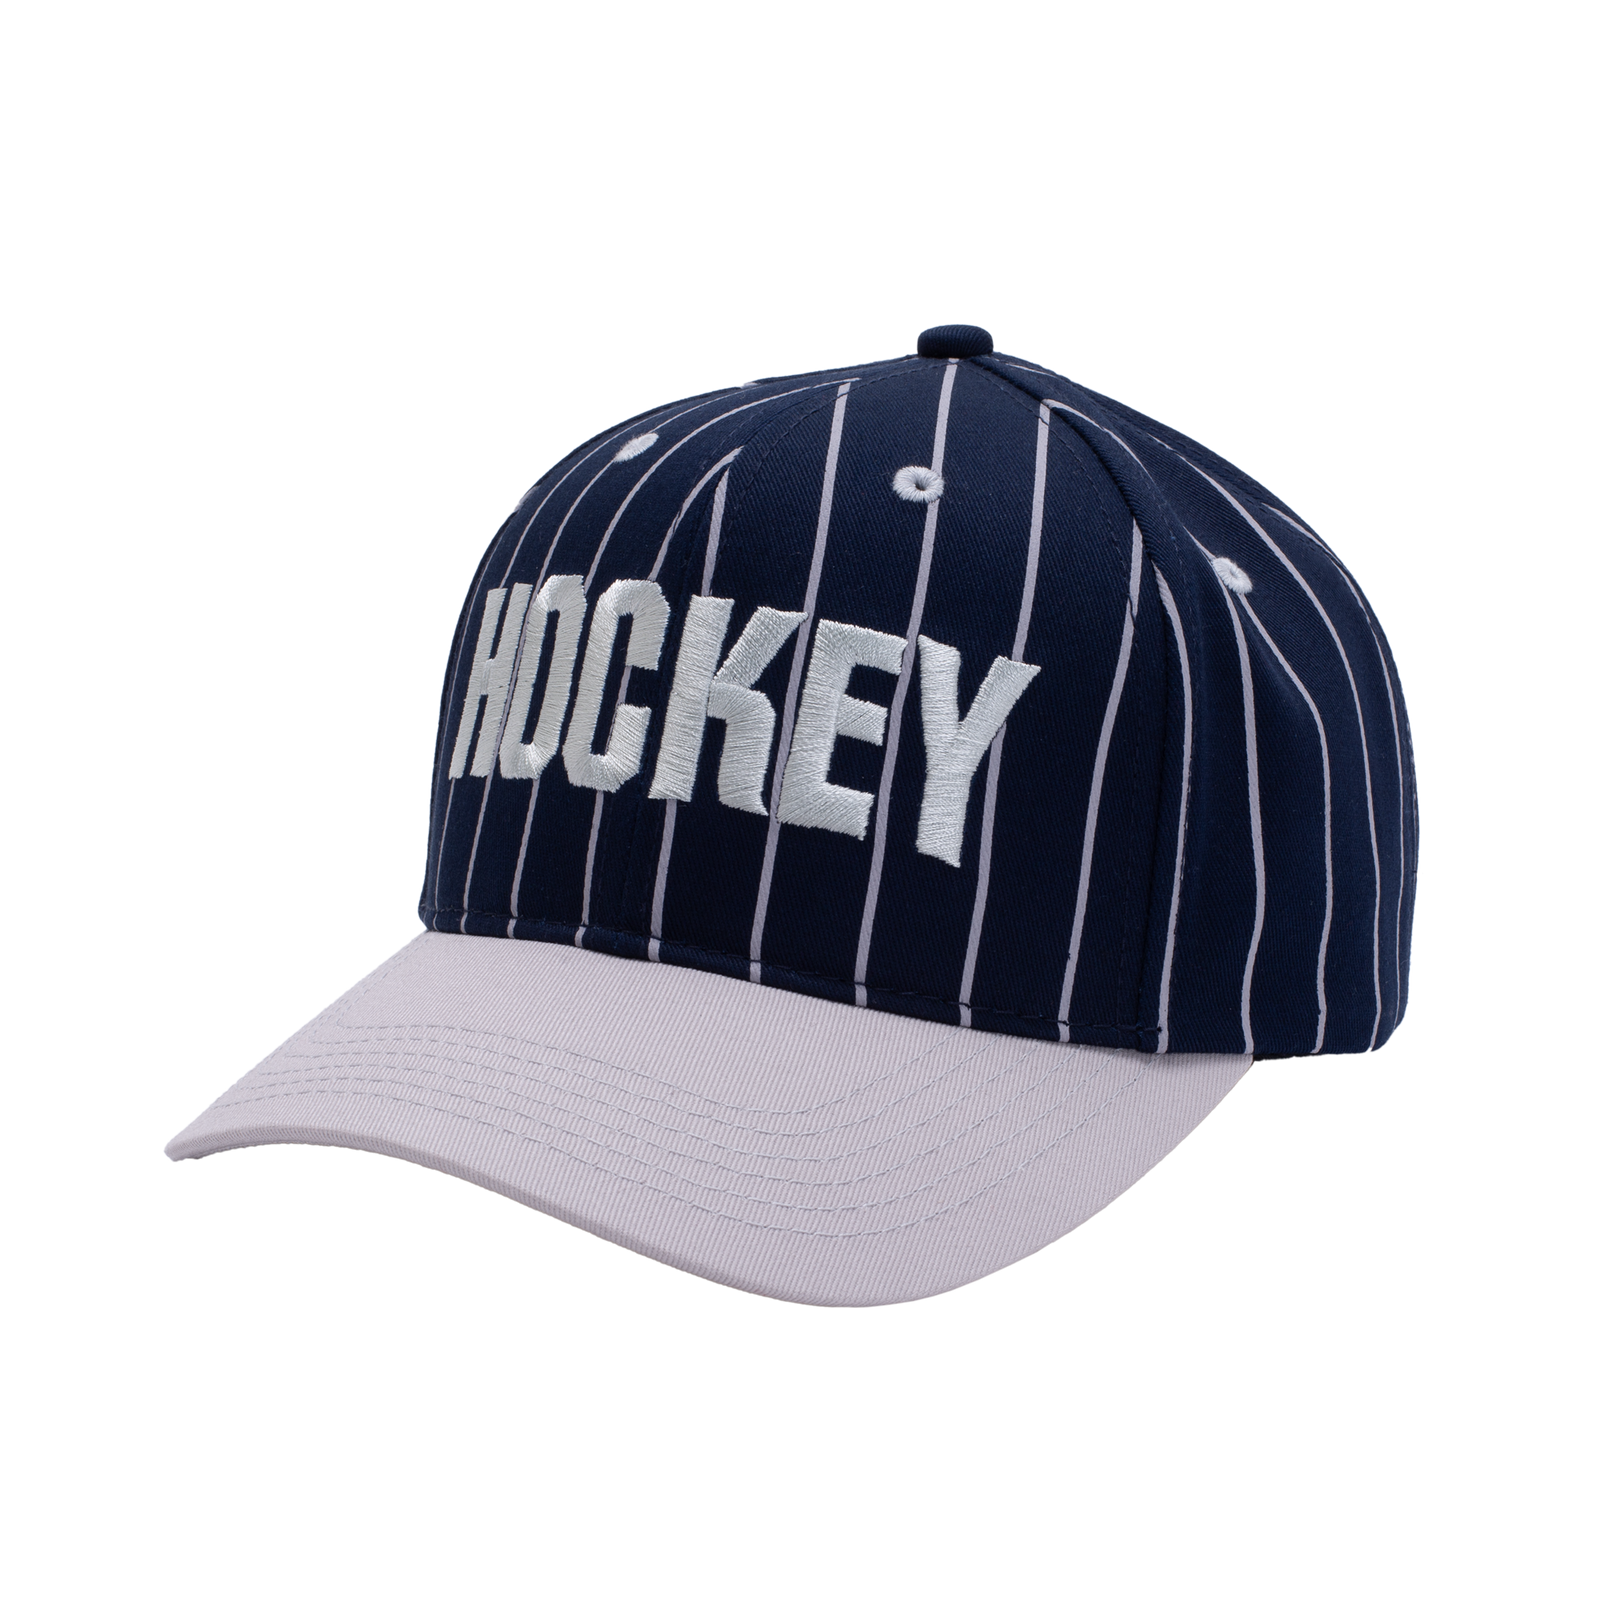 Hockey Pinstriped Hat